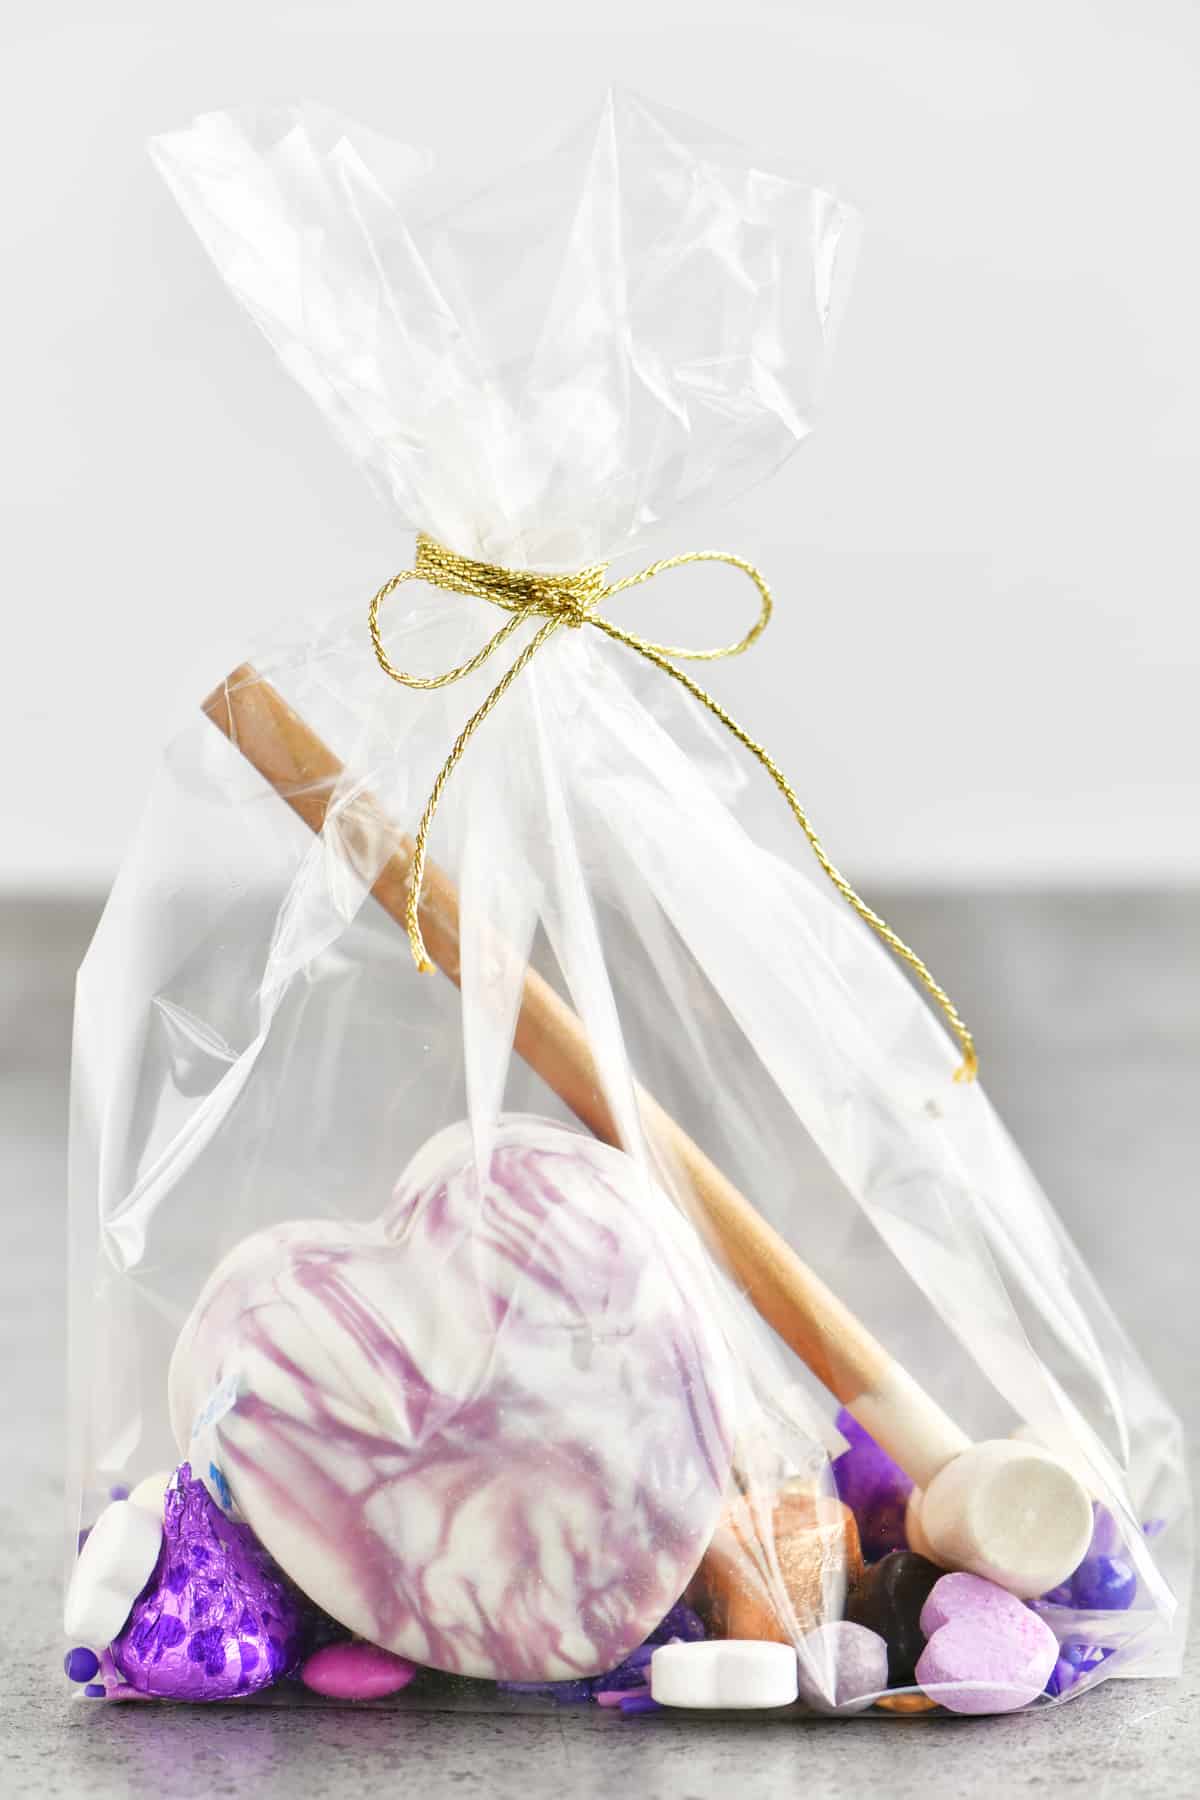 purple and white swirled breakable chocolate heart in a gift bag